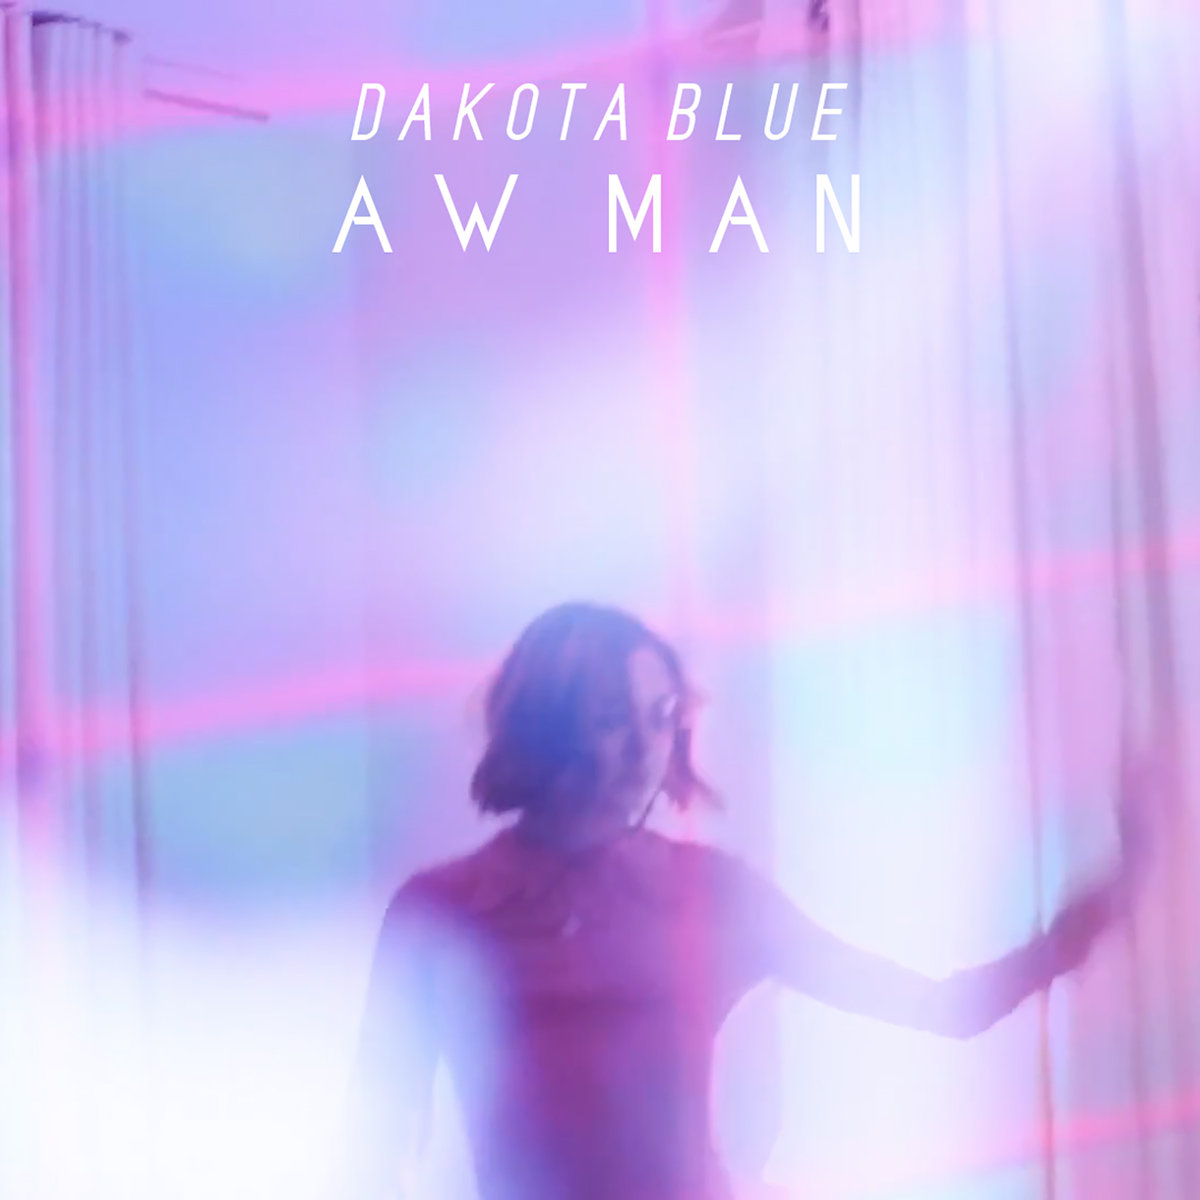 Aw Man - Dakota Blue